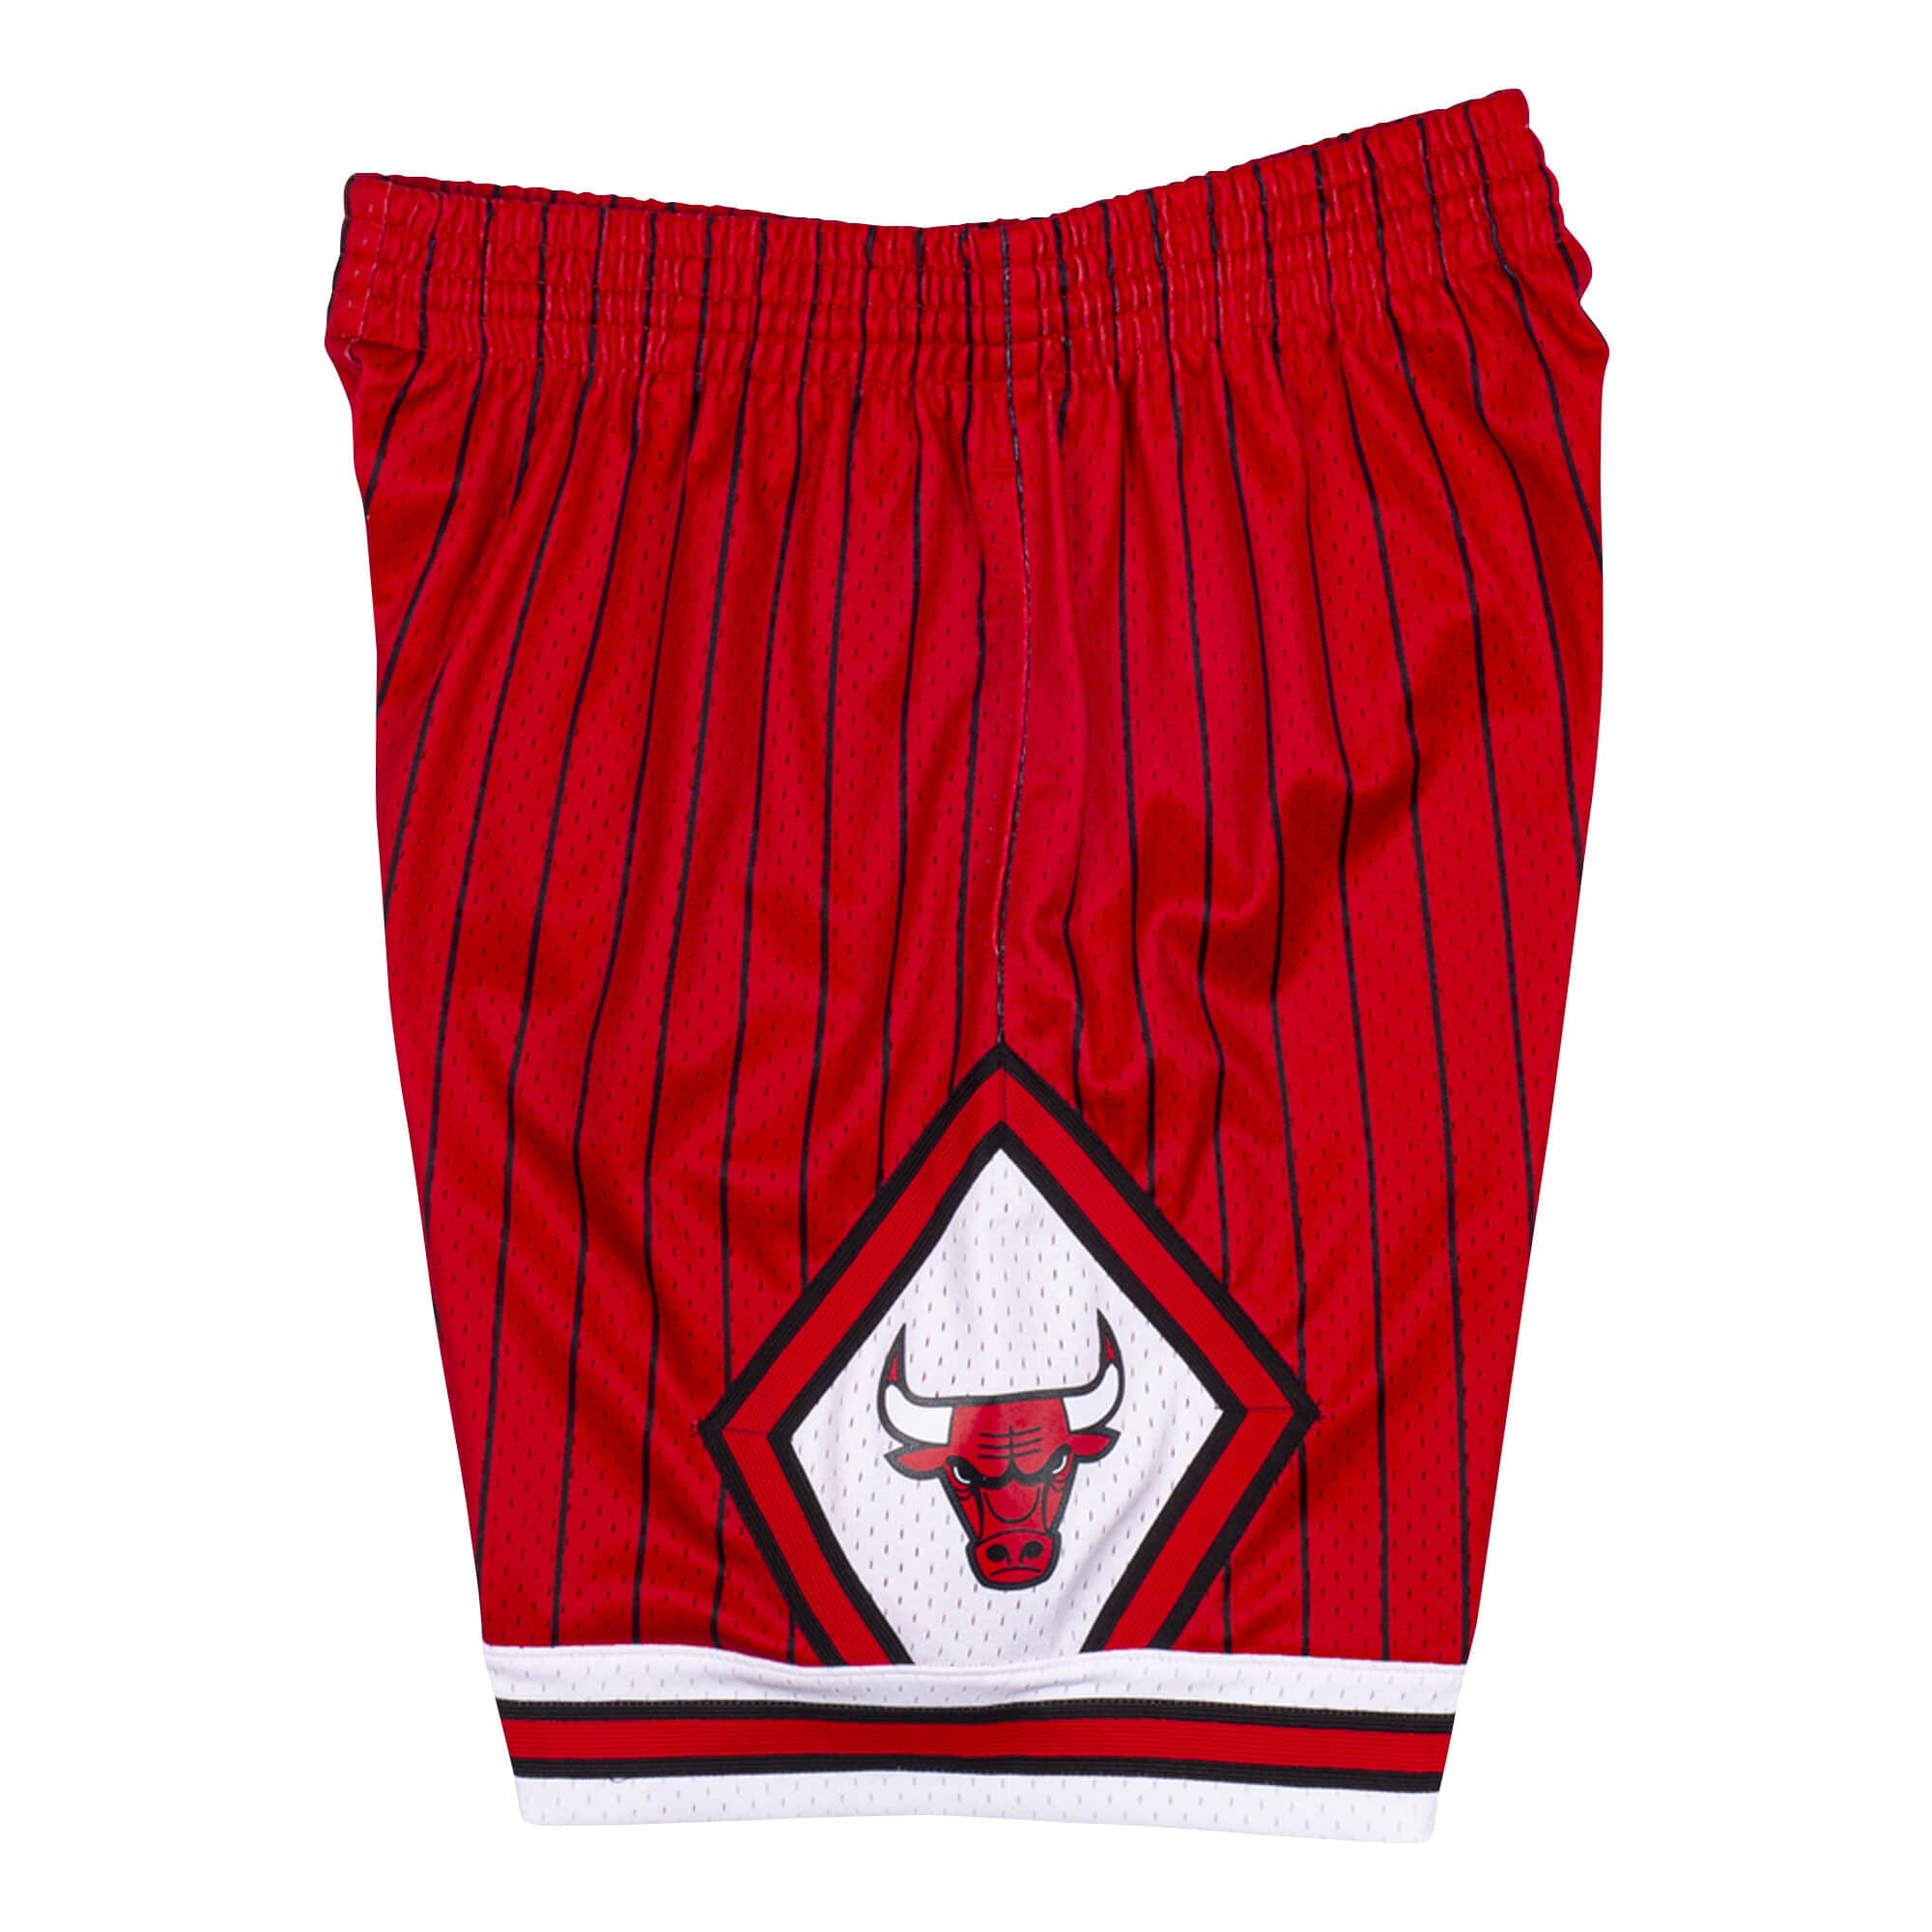 NBA Reload Bulls Swingman Shorts